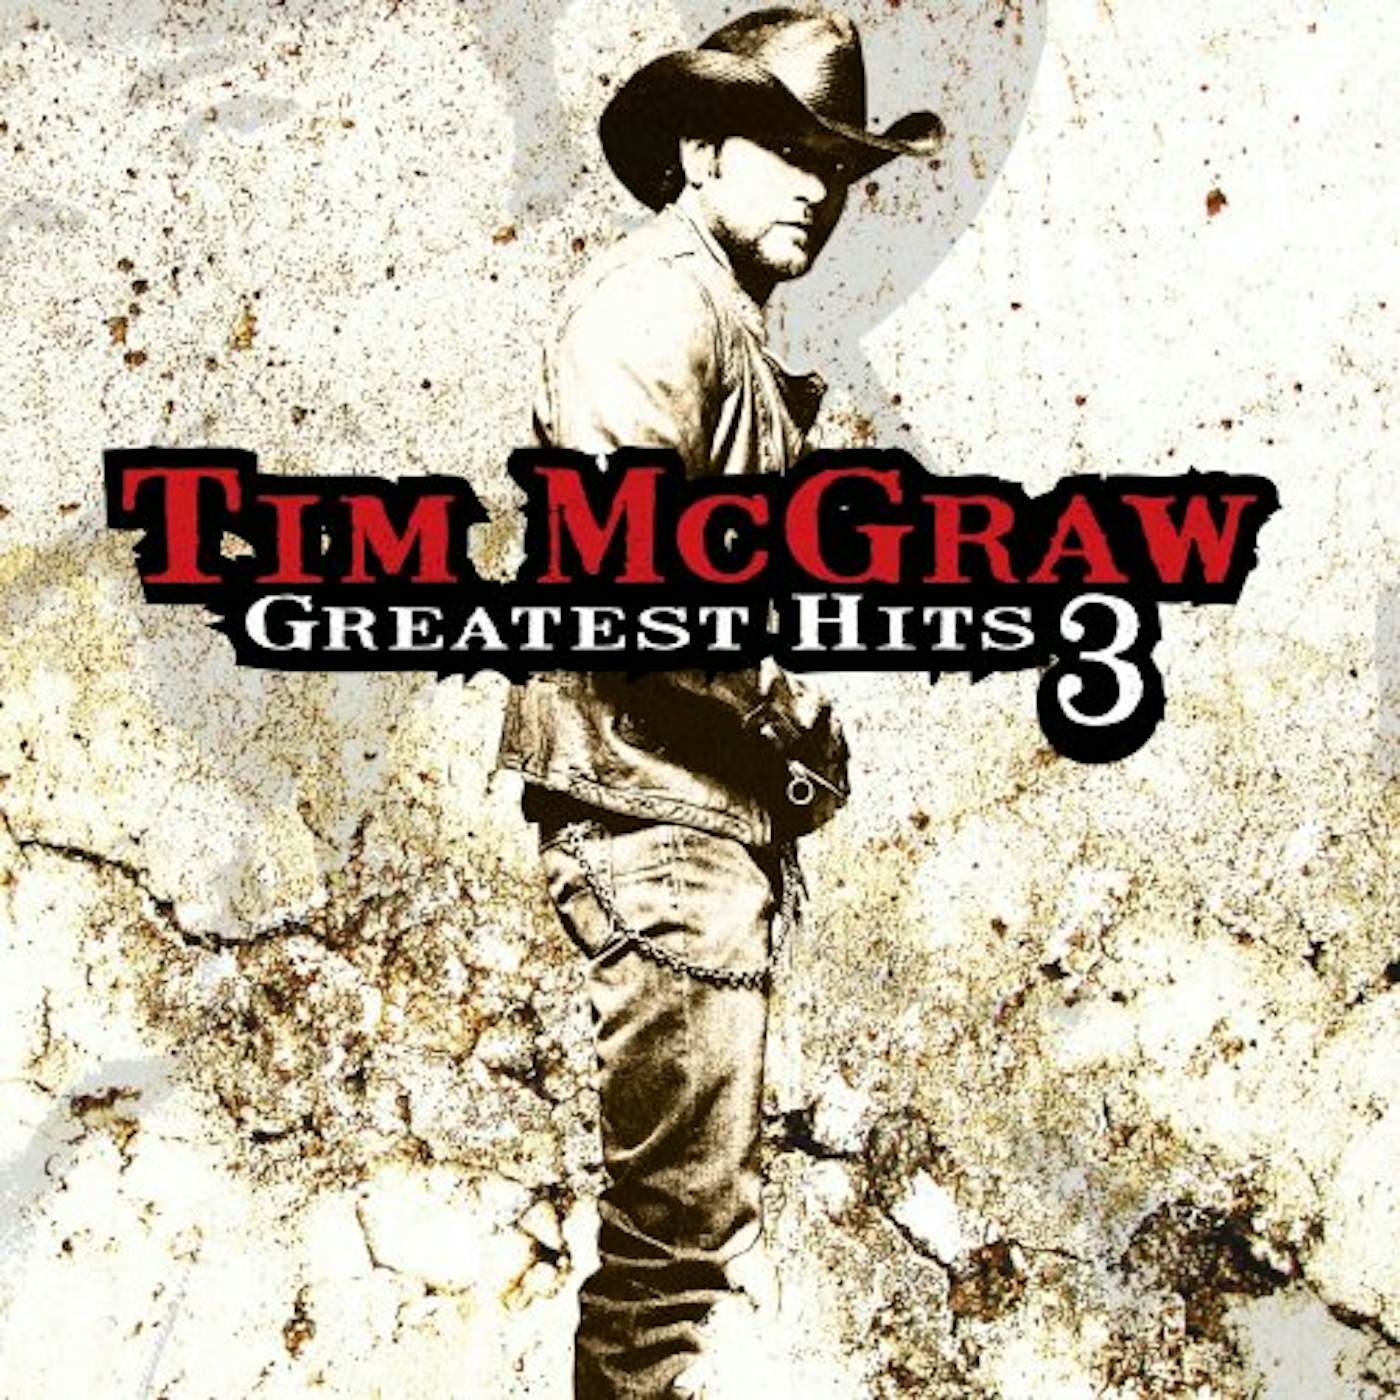 Tim McGraw GREATEST HITS 3 CD